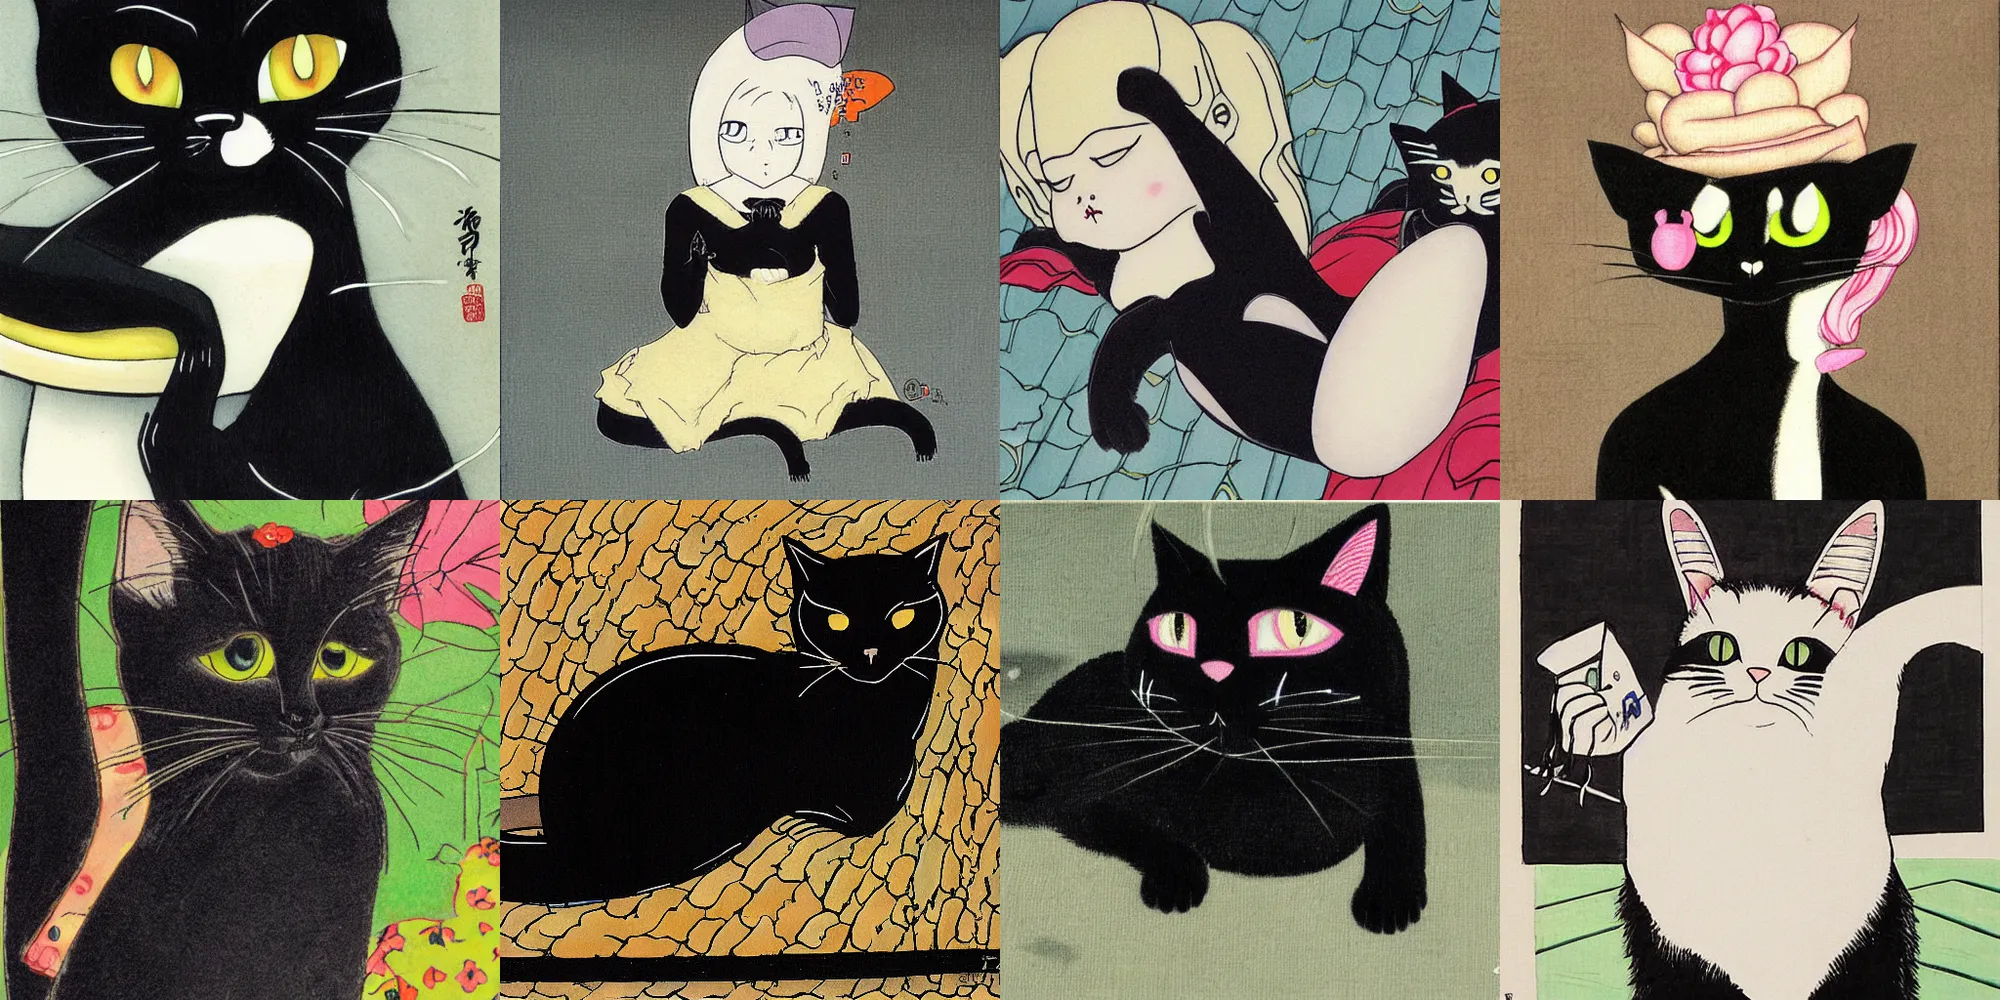 Prompt: black cat by tsuguharu foujita